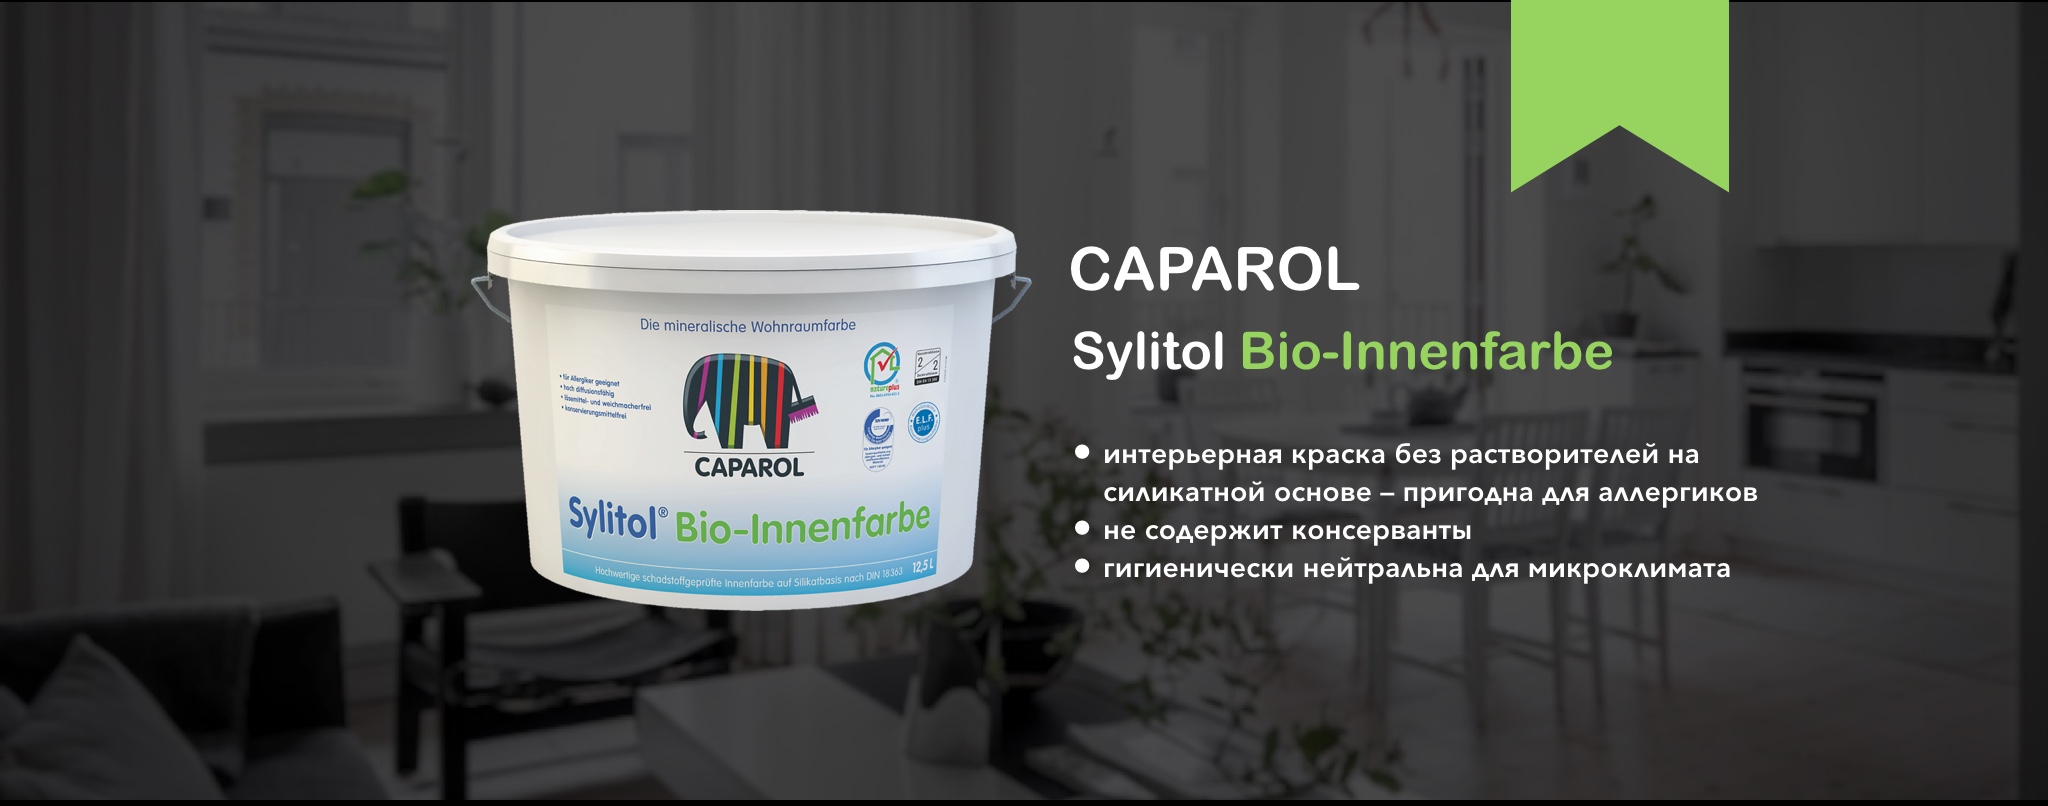 Силикатная краска Caparol Sylitol Bio-Innenfarbe